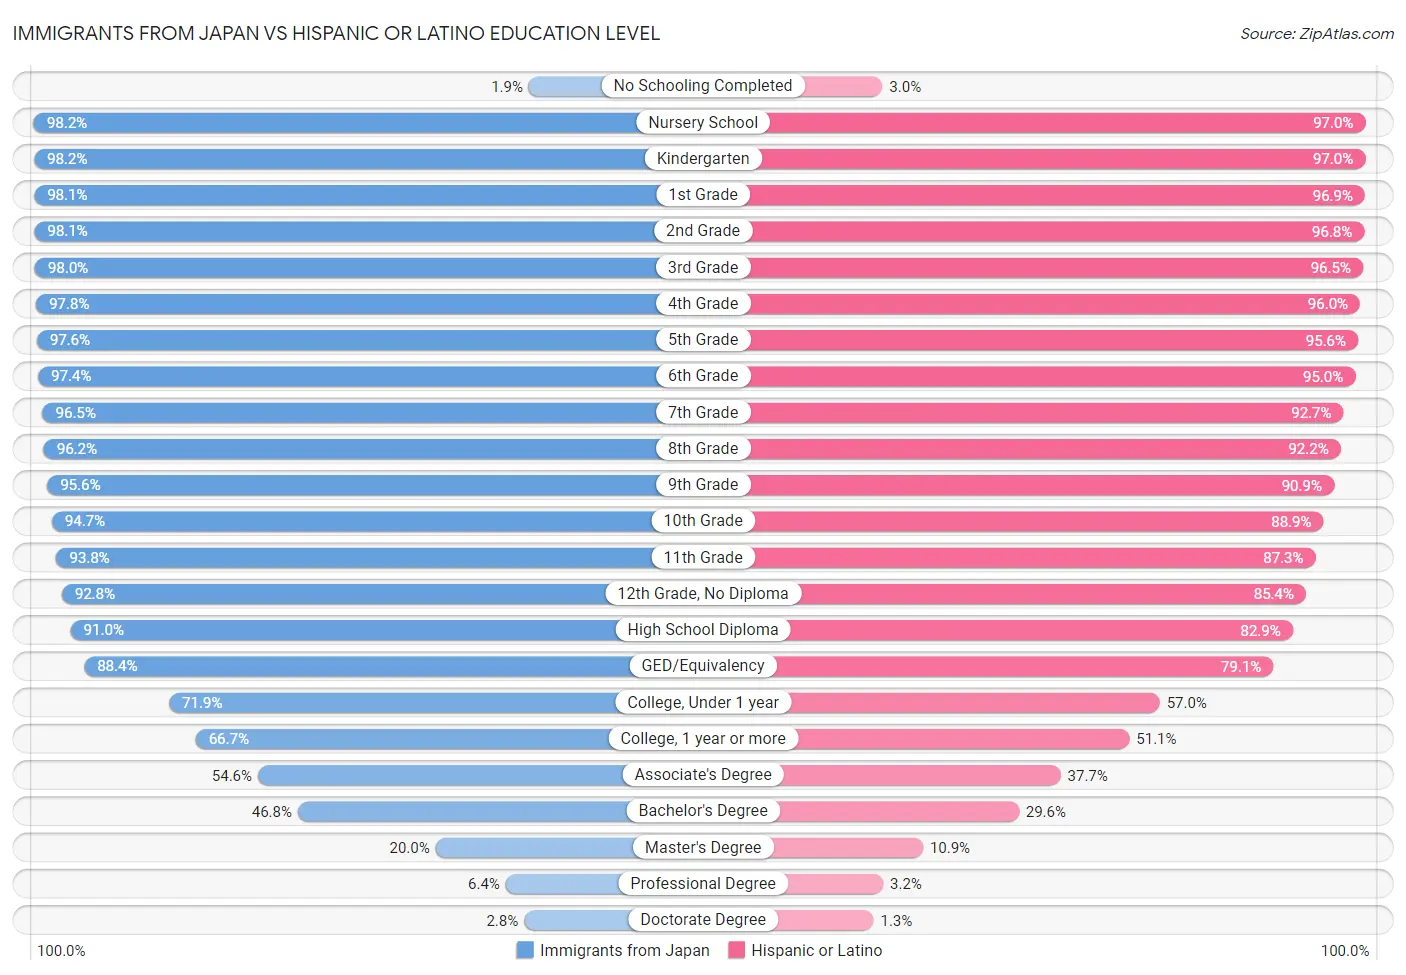 Immigrants from Japan vs Hispanic or Latino Education Level